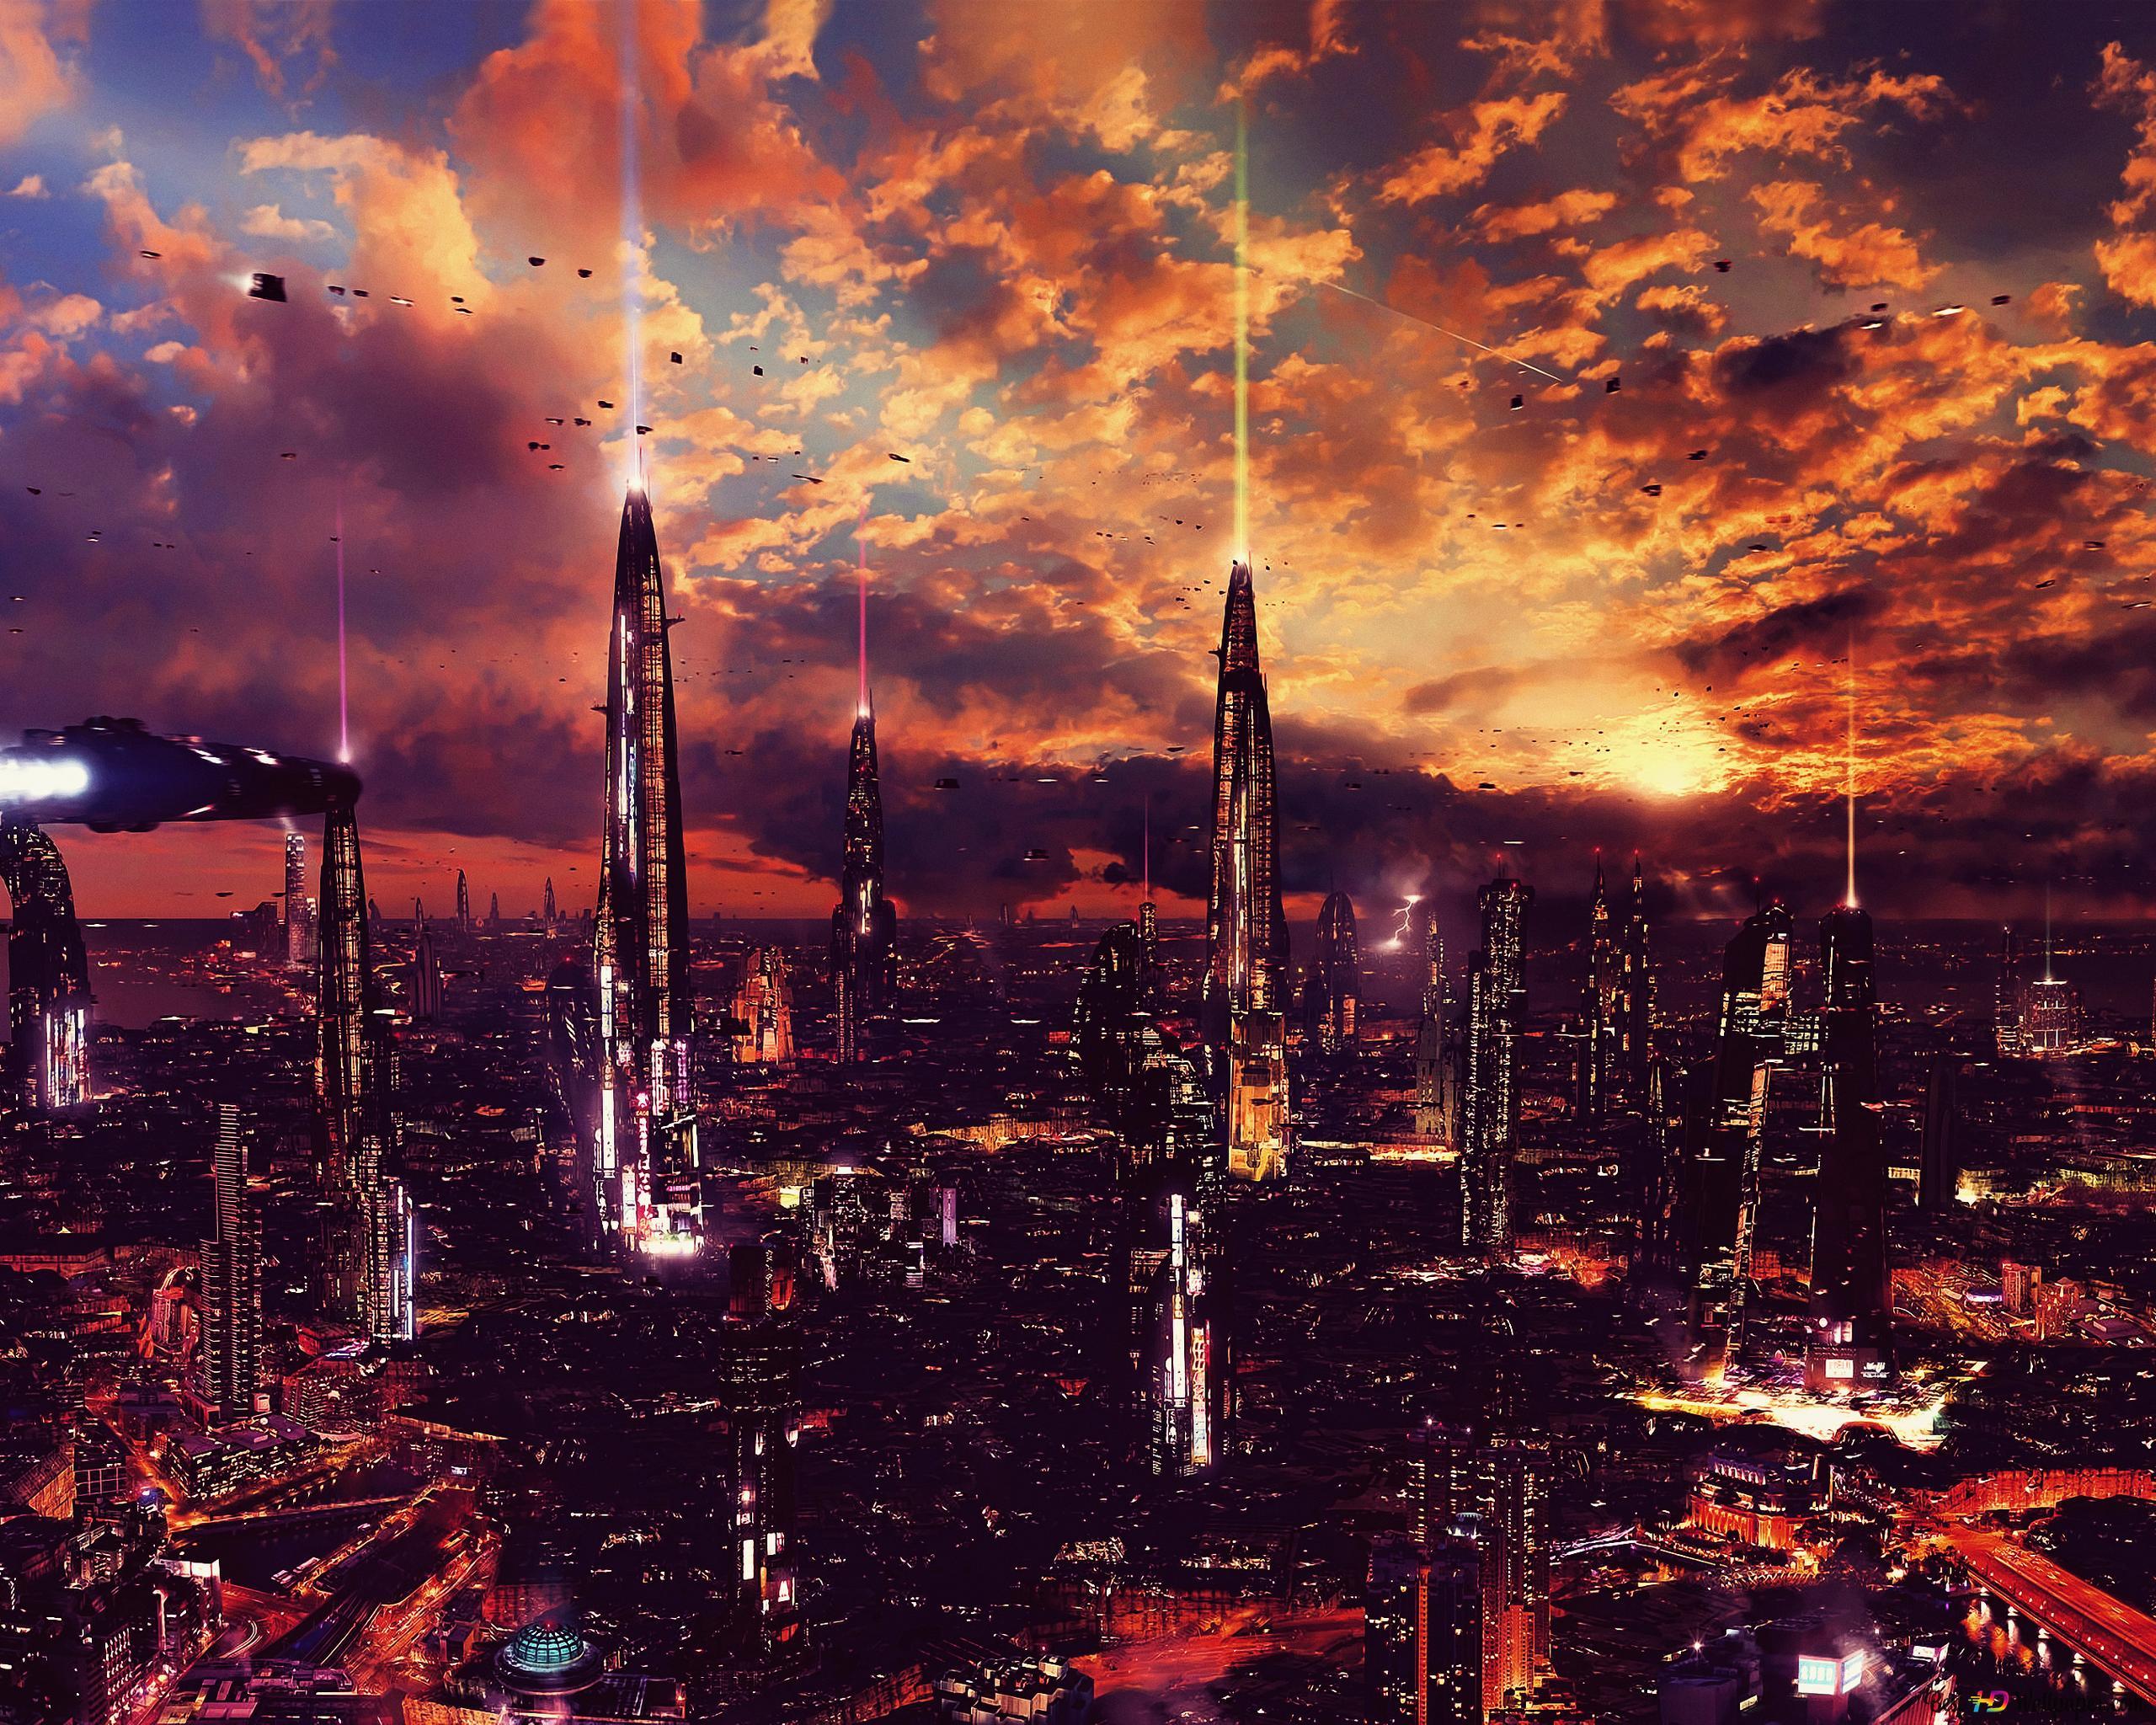 Sci Fi City 4k Wallpapers - Top Free Sci Fi City 4k Backgrounds ...